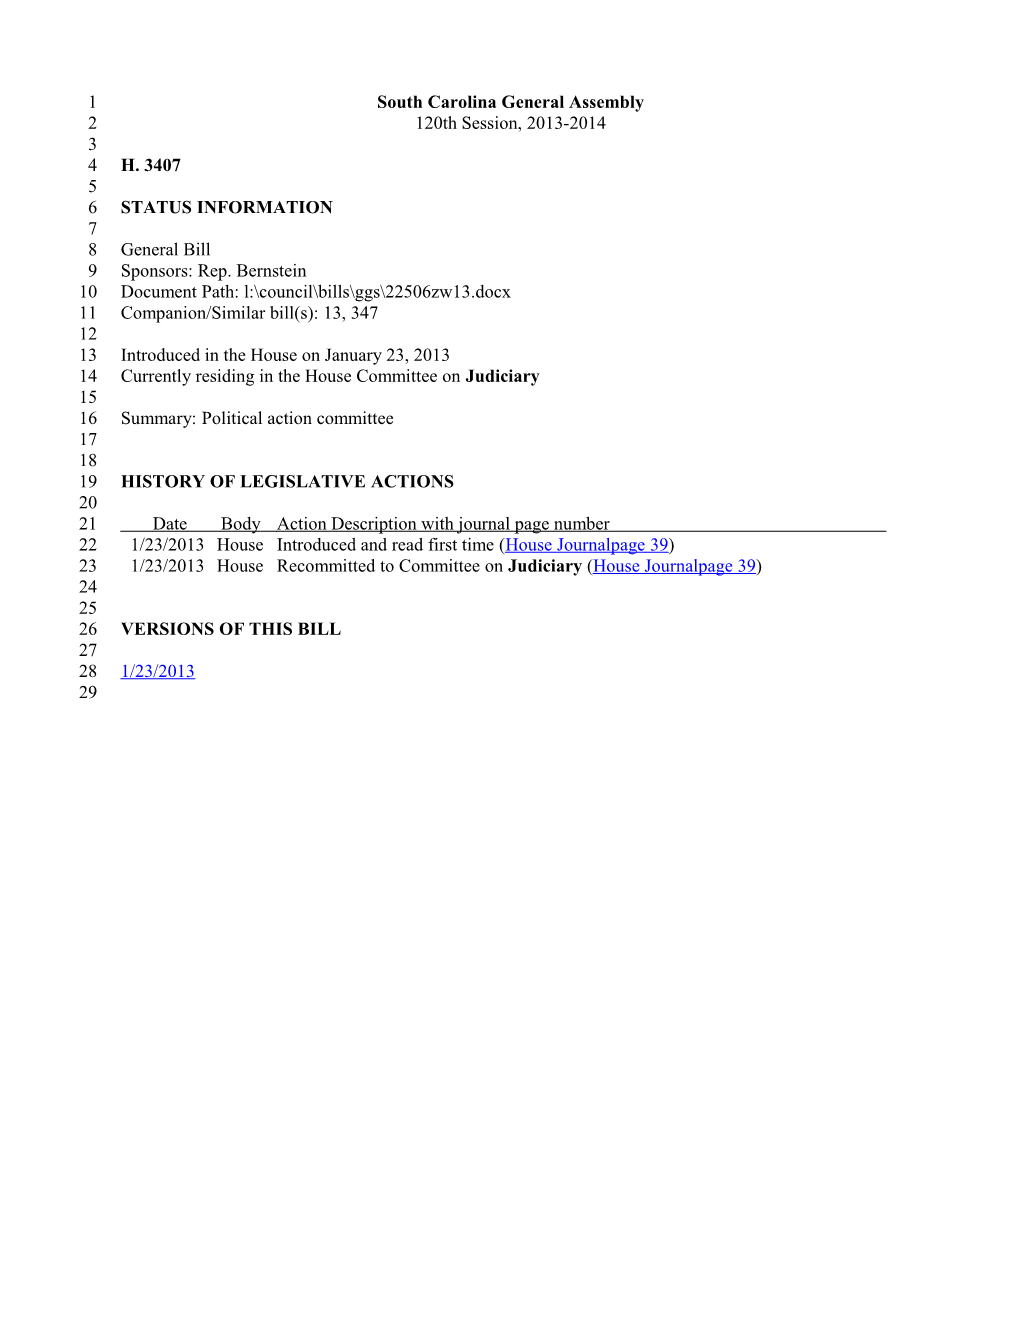 2013-2014 Bill 3407: Political Action Committee - South Carolina Legislature Online